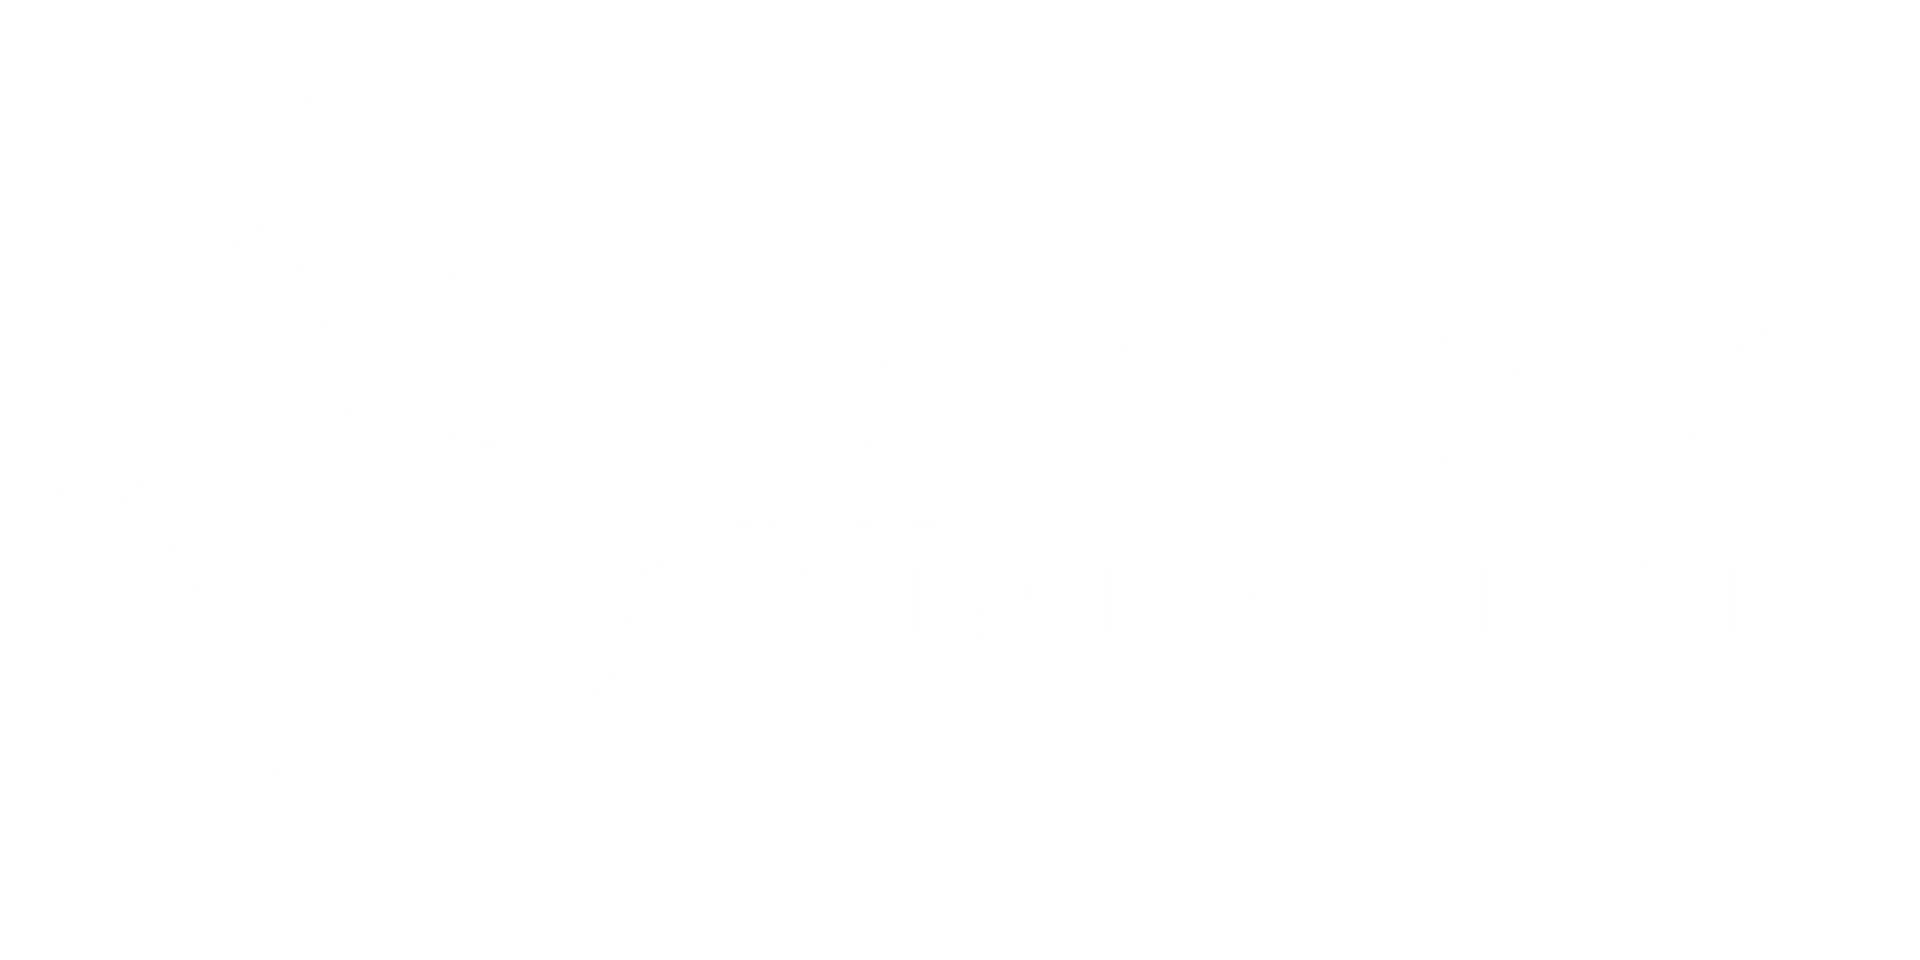 Lionheart Fence Builders - Logo